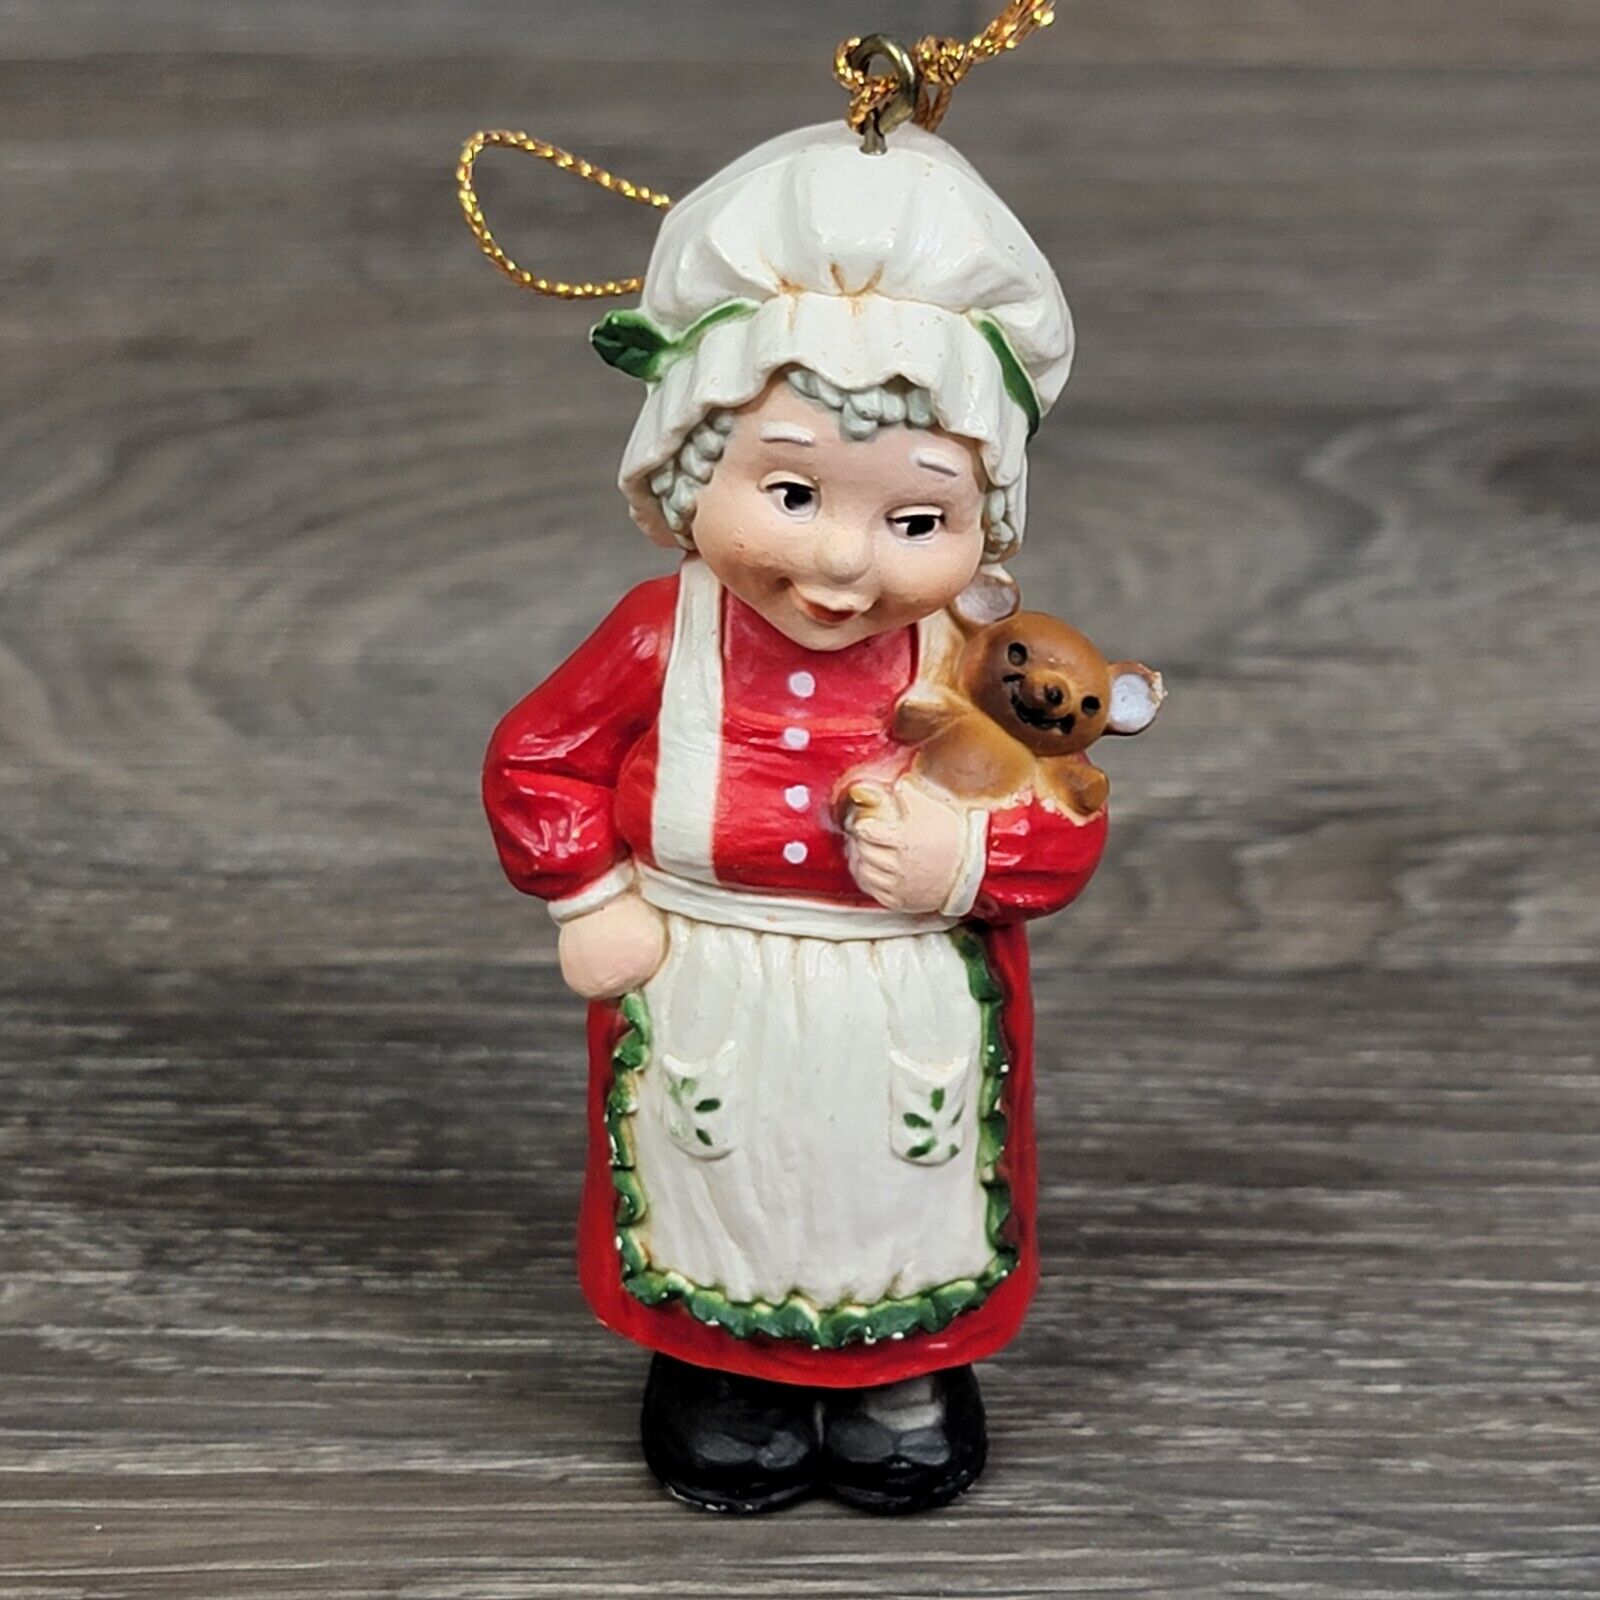 Vintage Holiday Memories Collector Ornaments Mrs Santa Claus ornament plastic